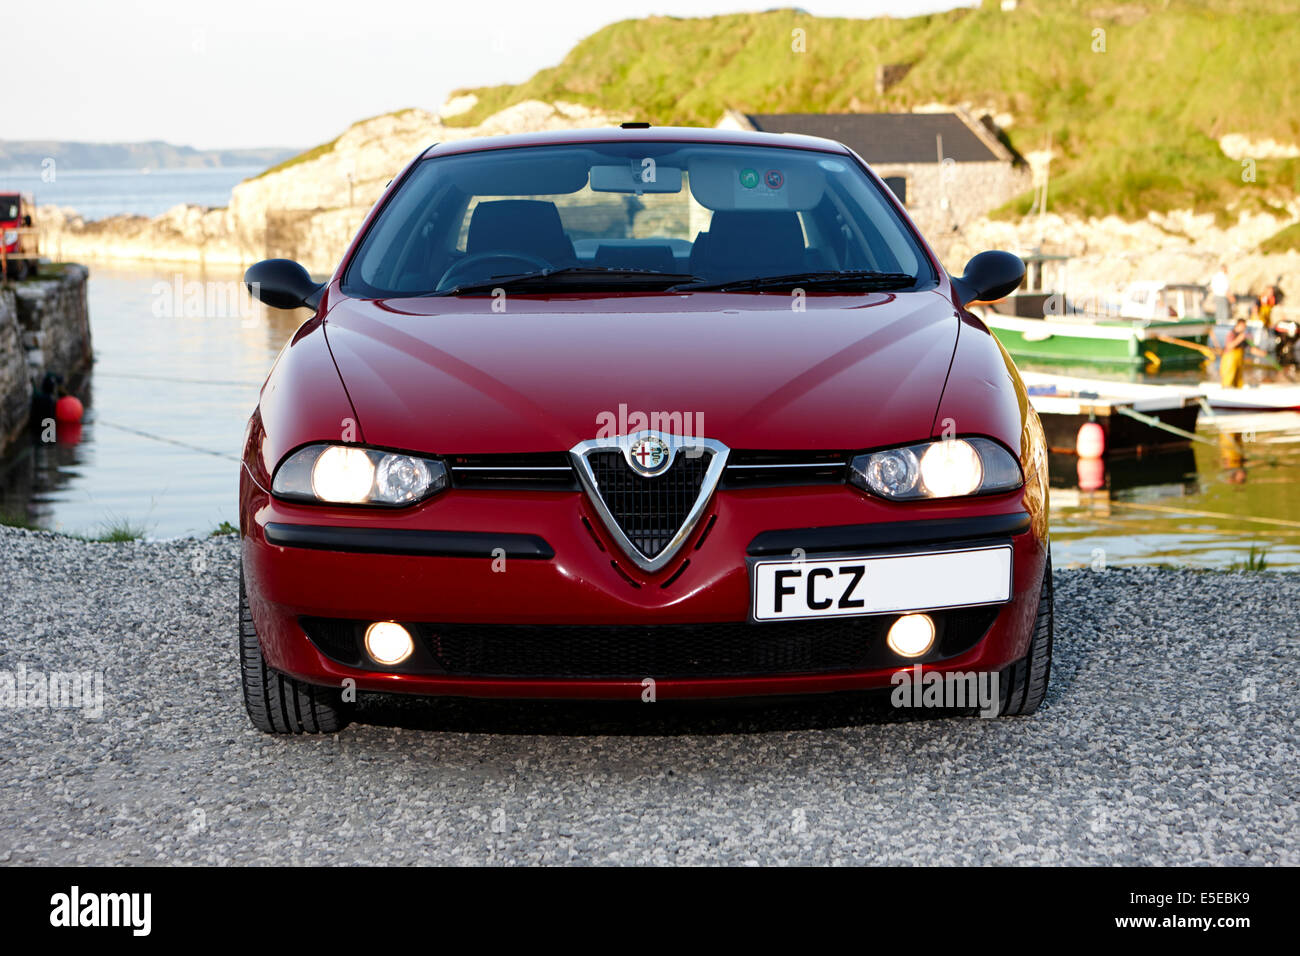 Alfa Romeo 156 Stock Photo